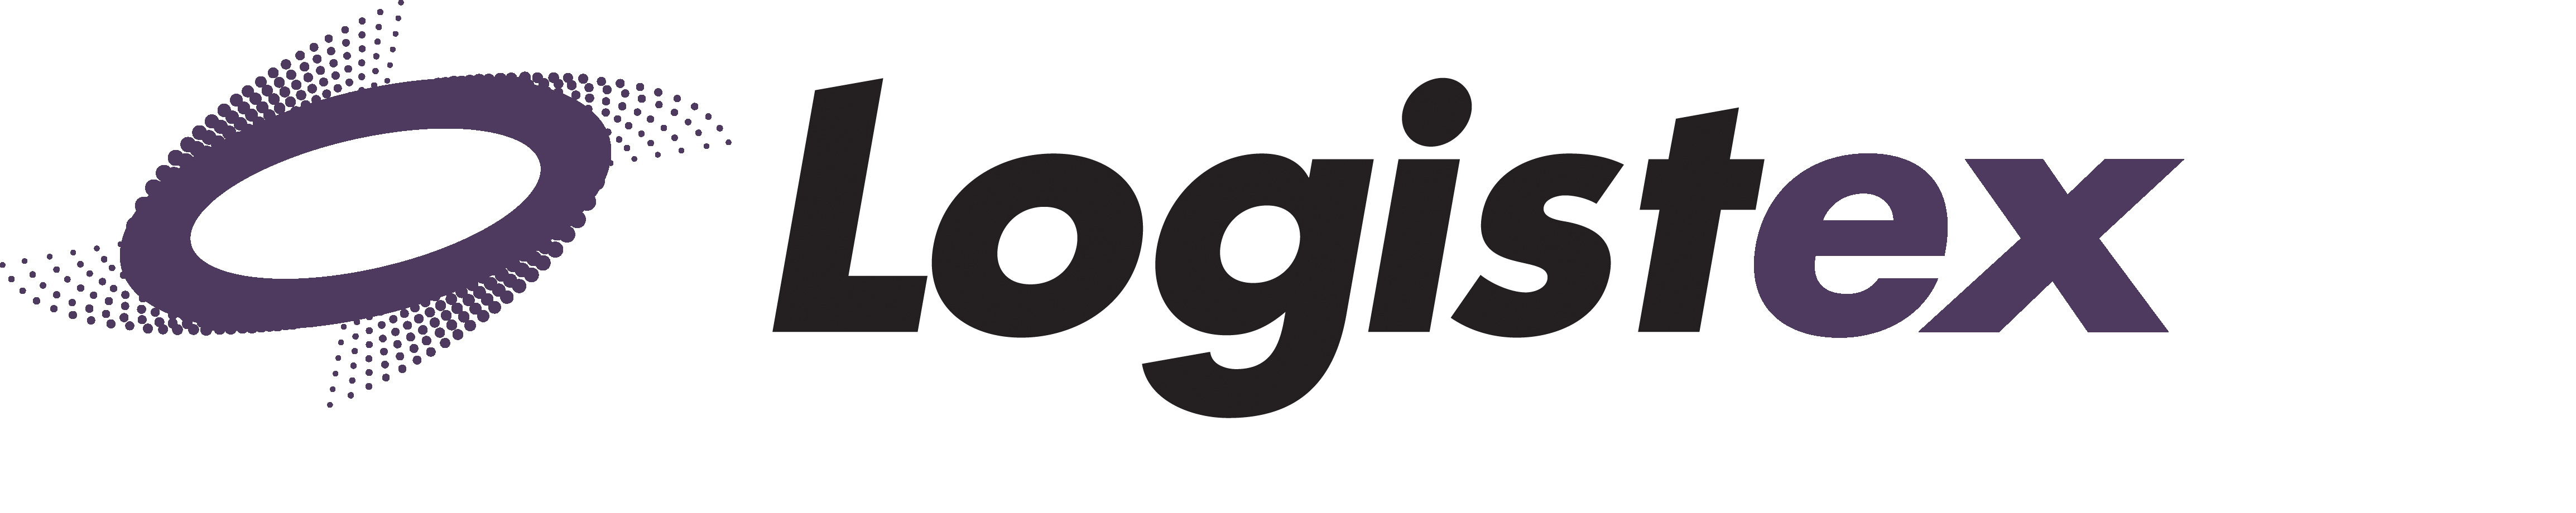 Logistex logo updated